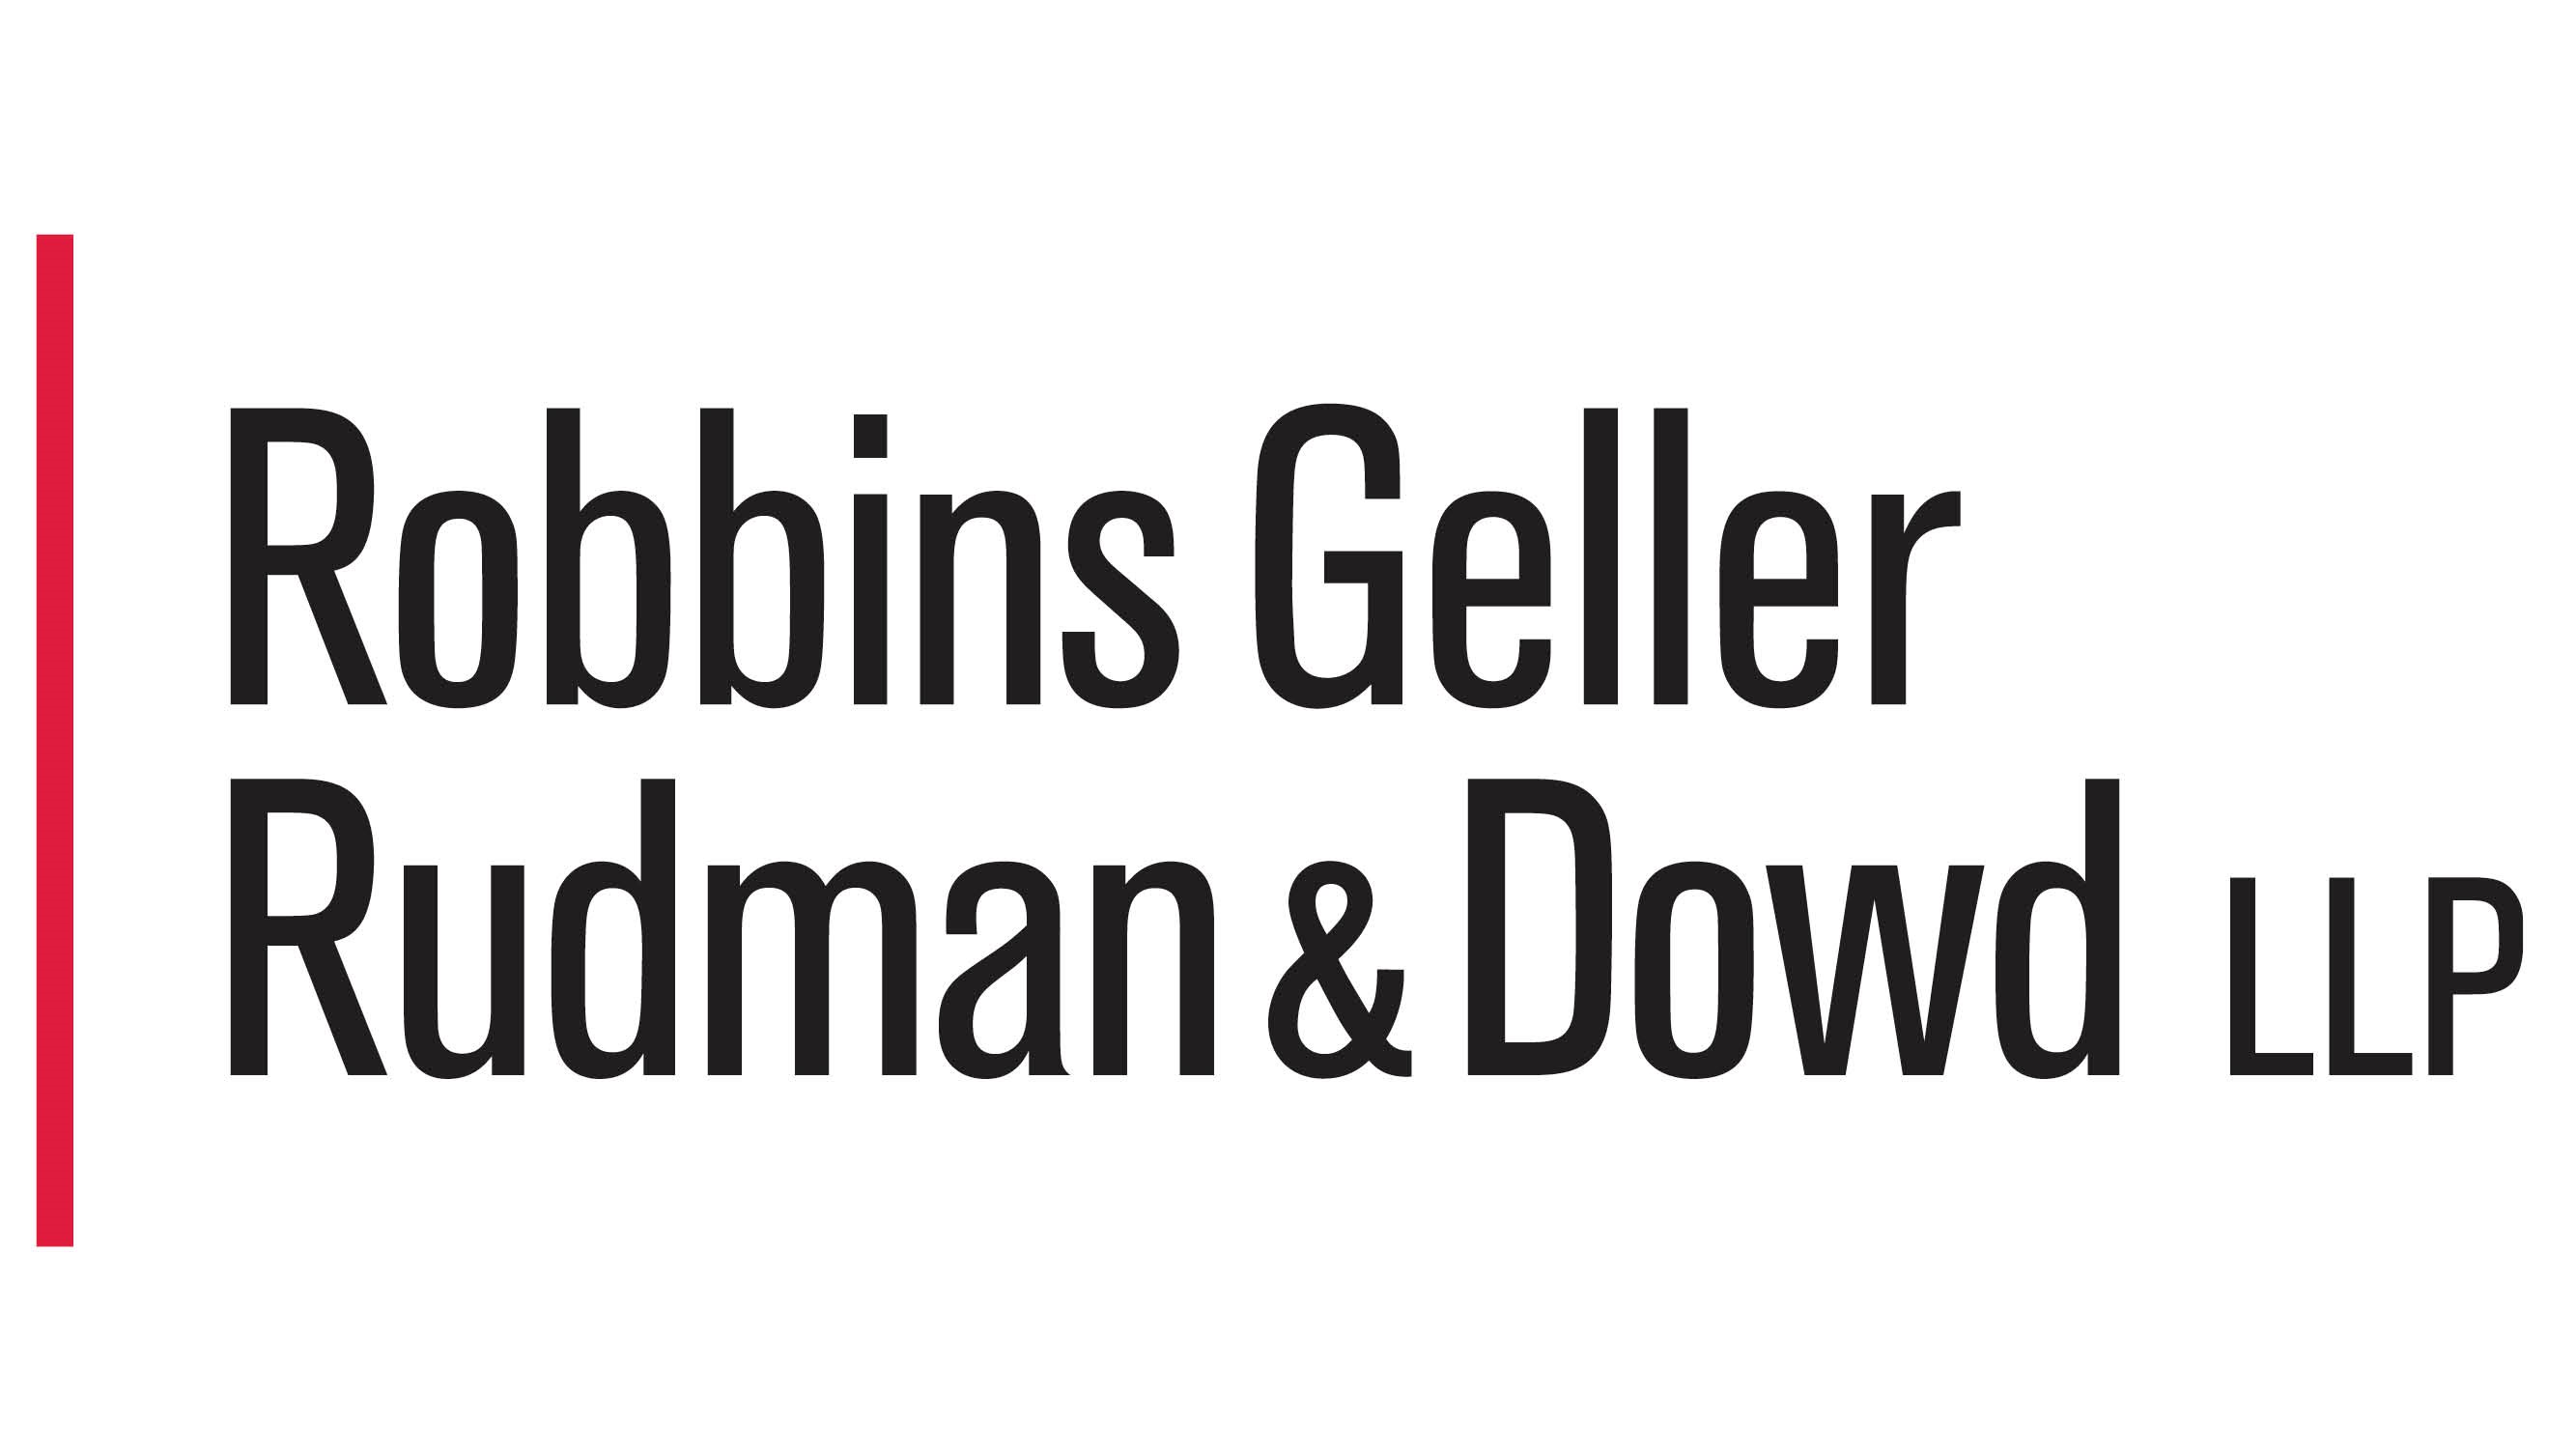 Robbins Geller Rudman & Dowd LLP, Thursday, September 16, 2021, Press release picture